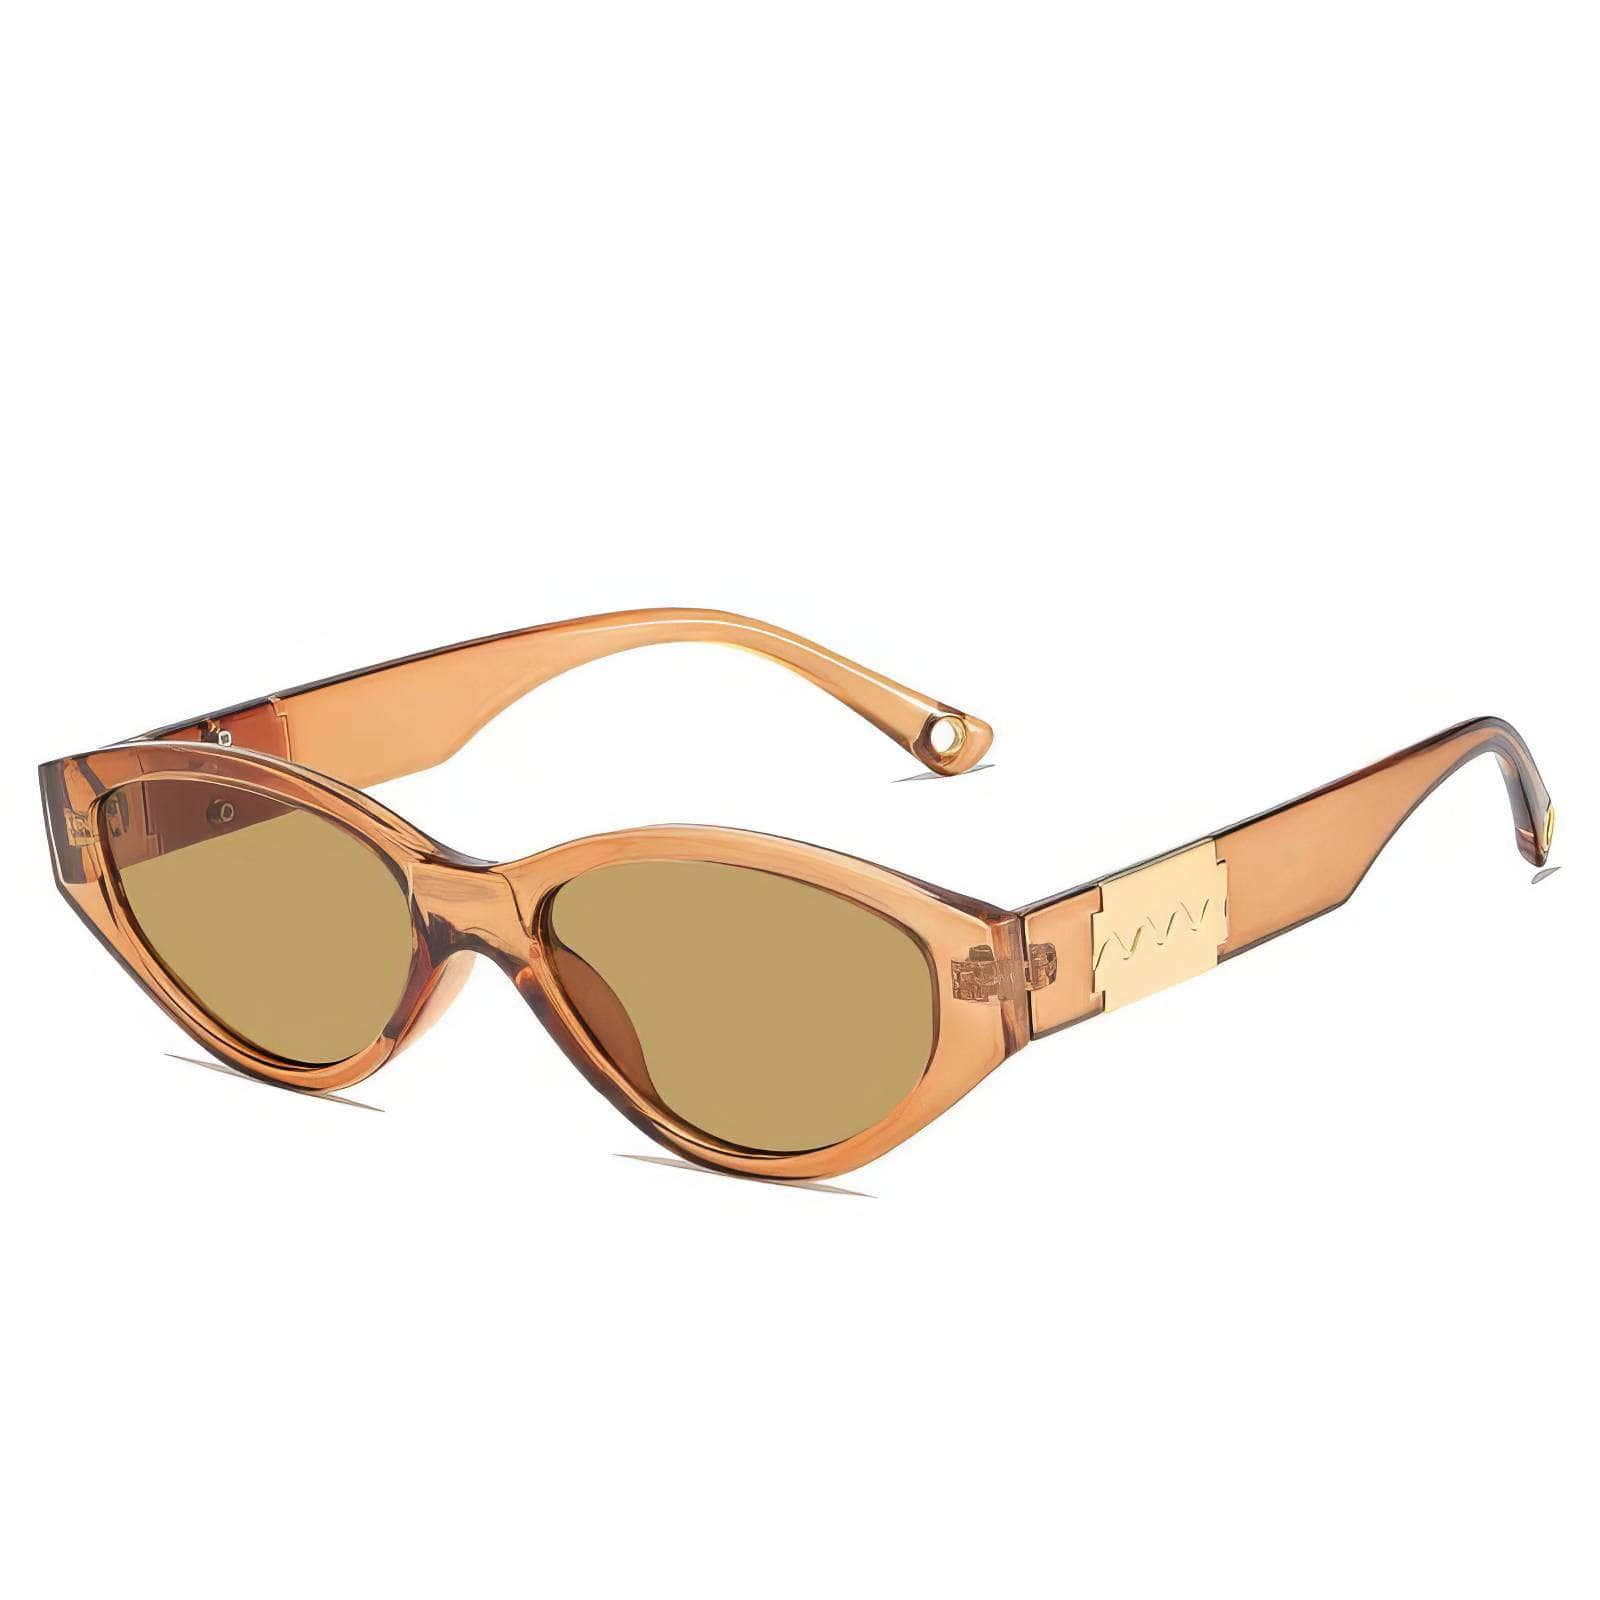 Fashion Trending Cat Eye Sunglasses Tan / Resin